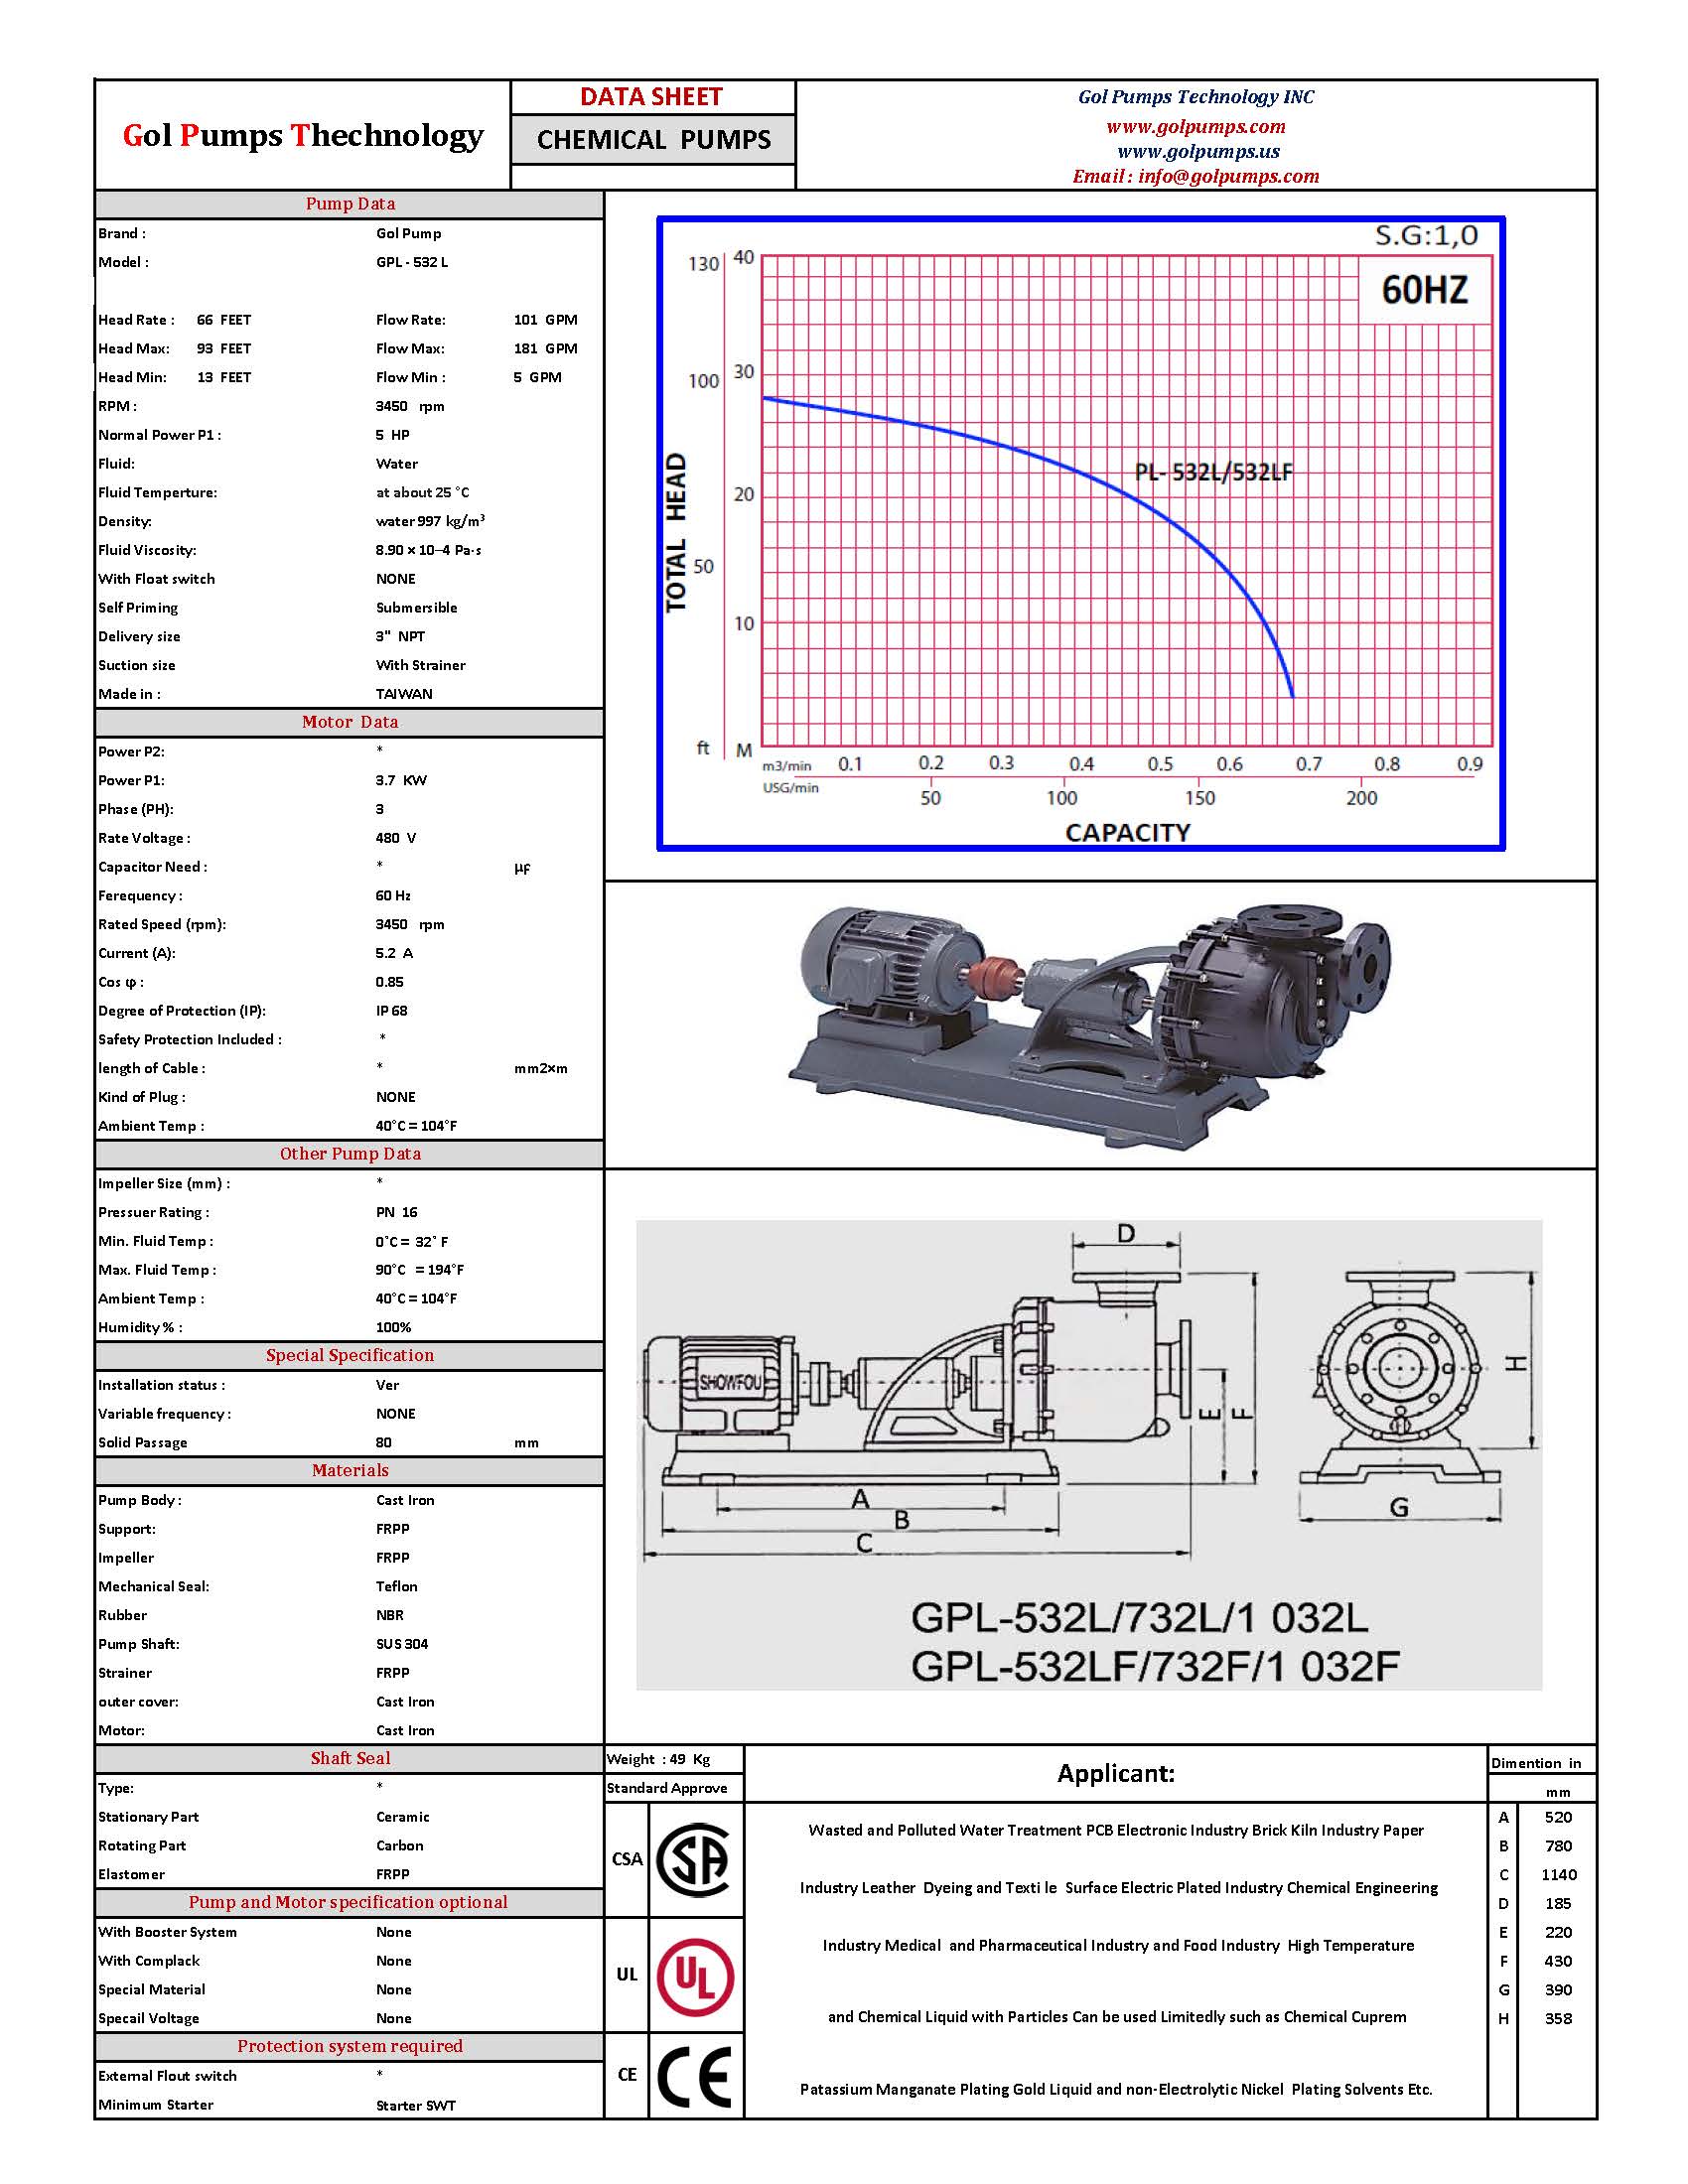 GPL-532L Chemical Pump - Data Sheet